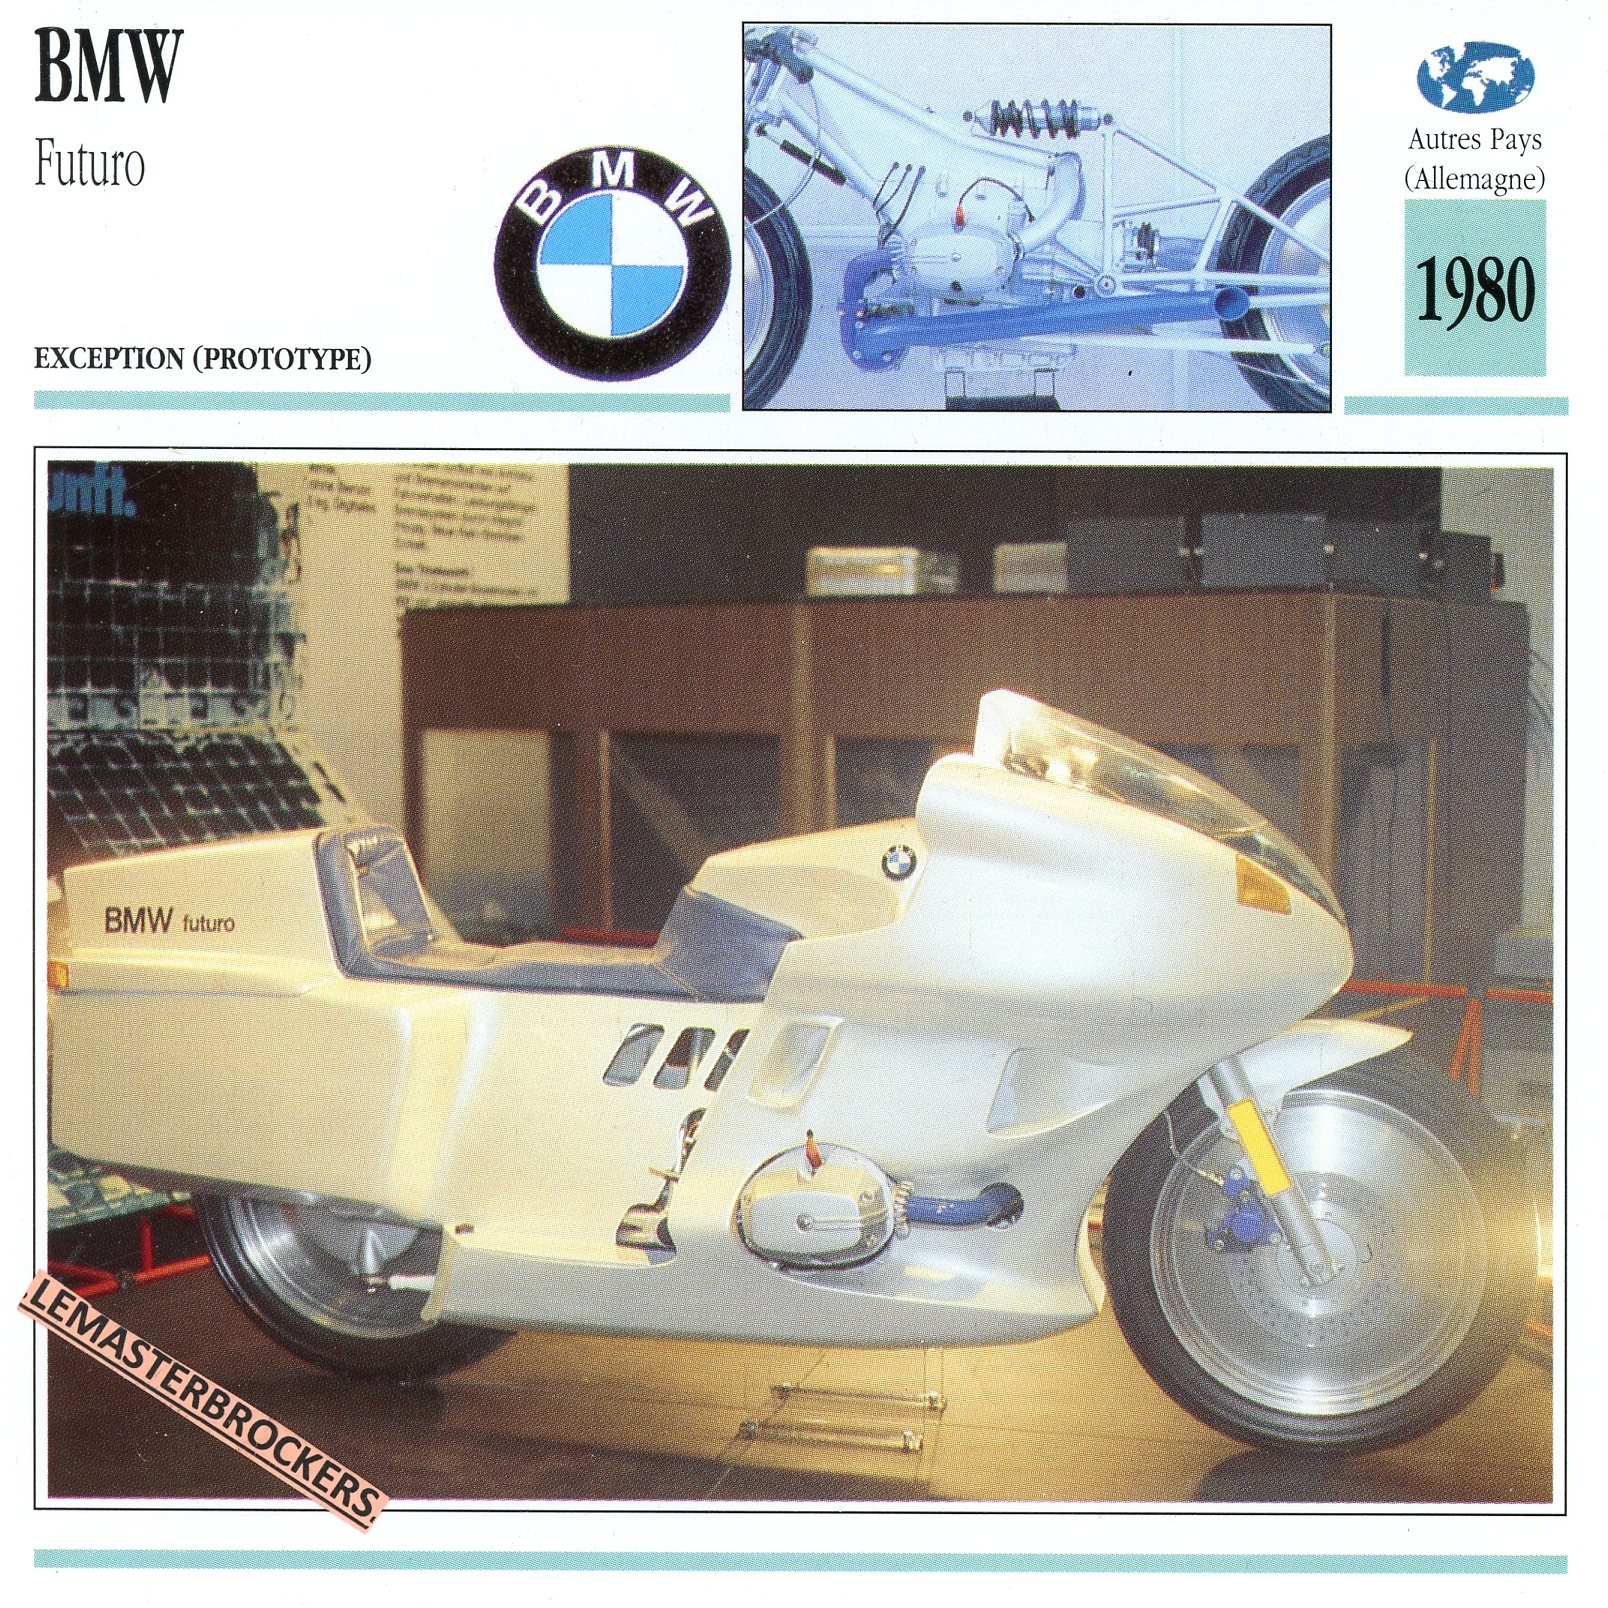 FICHE-MOTO-BMW-FUTURO-1980-LEMASTERBROCKERS-CARD-MOTORCYCLE-PROTOTYPE